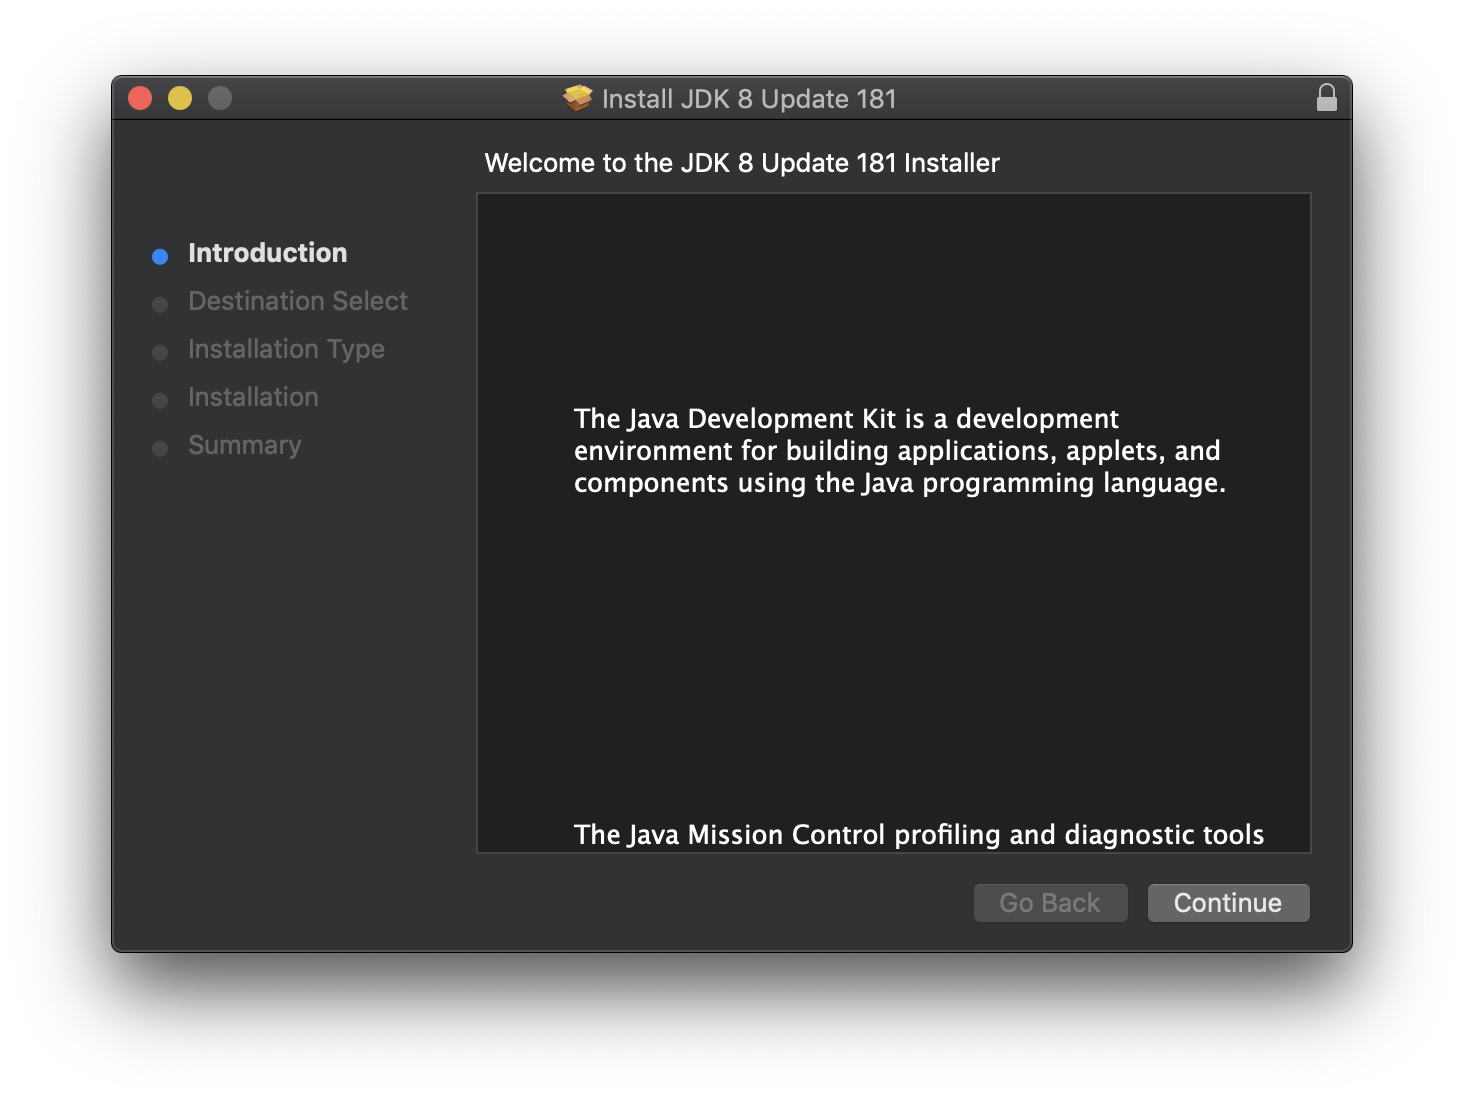 Jdk 1.8 0_181 Download For Mac